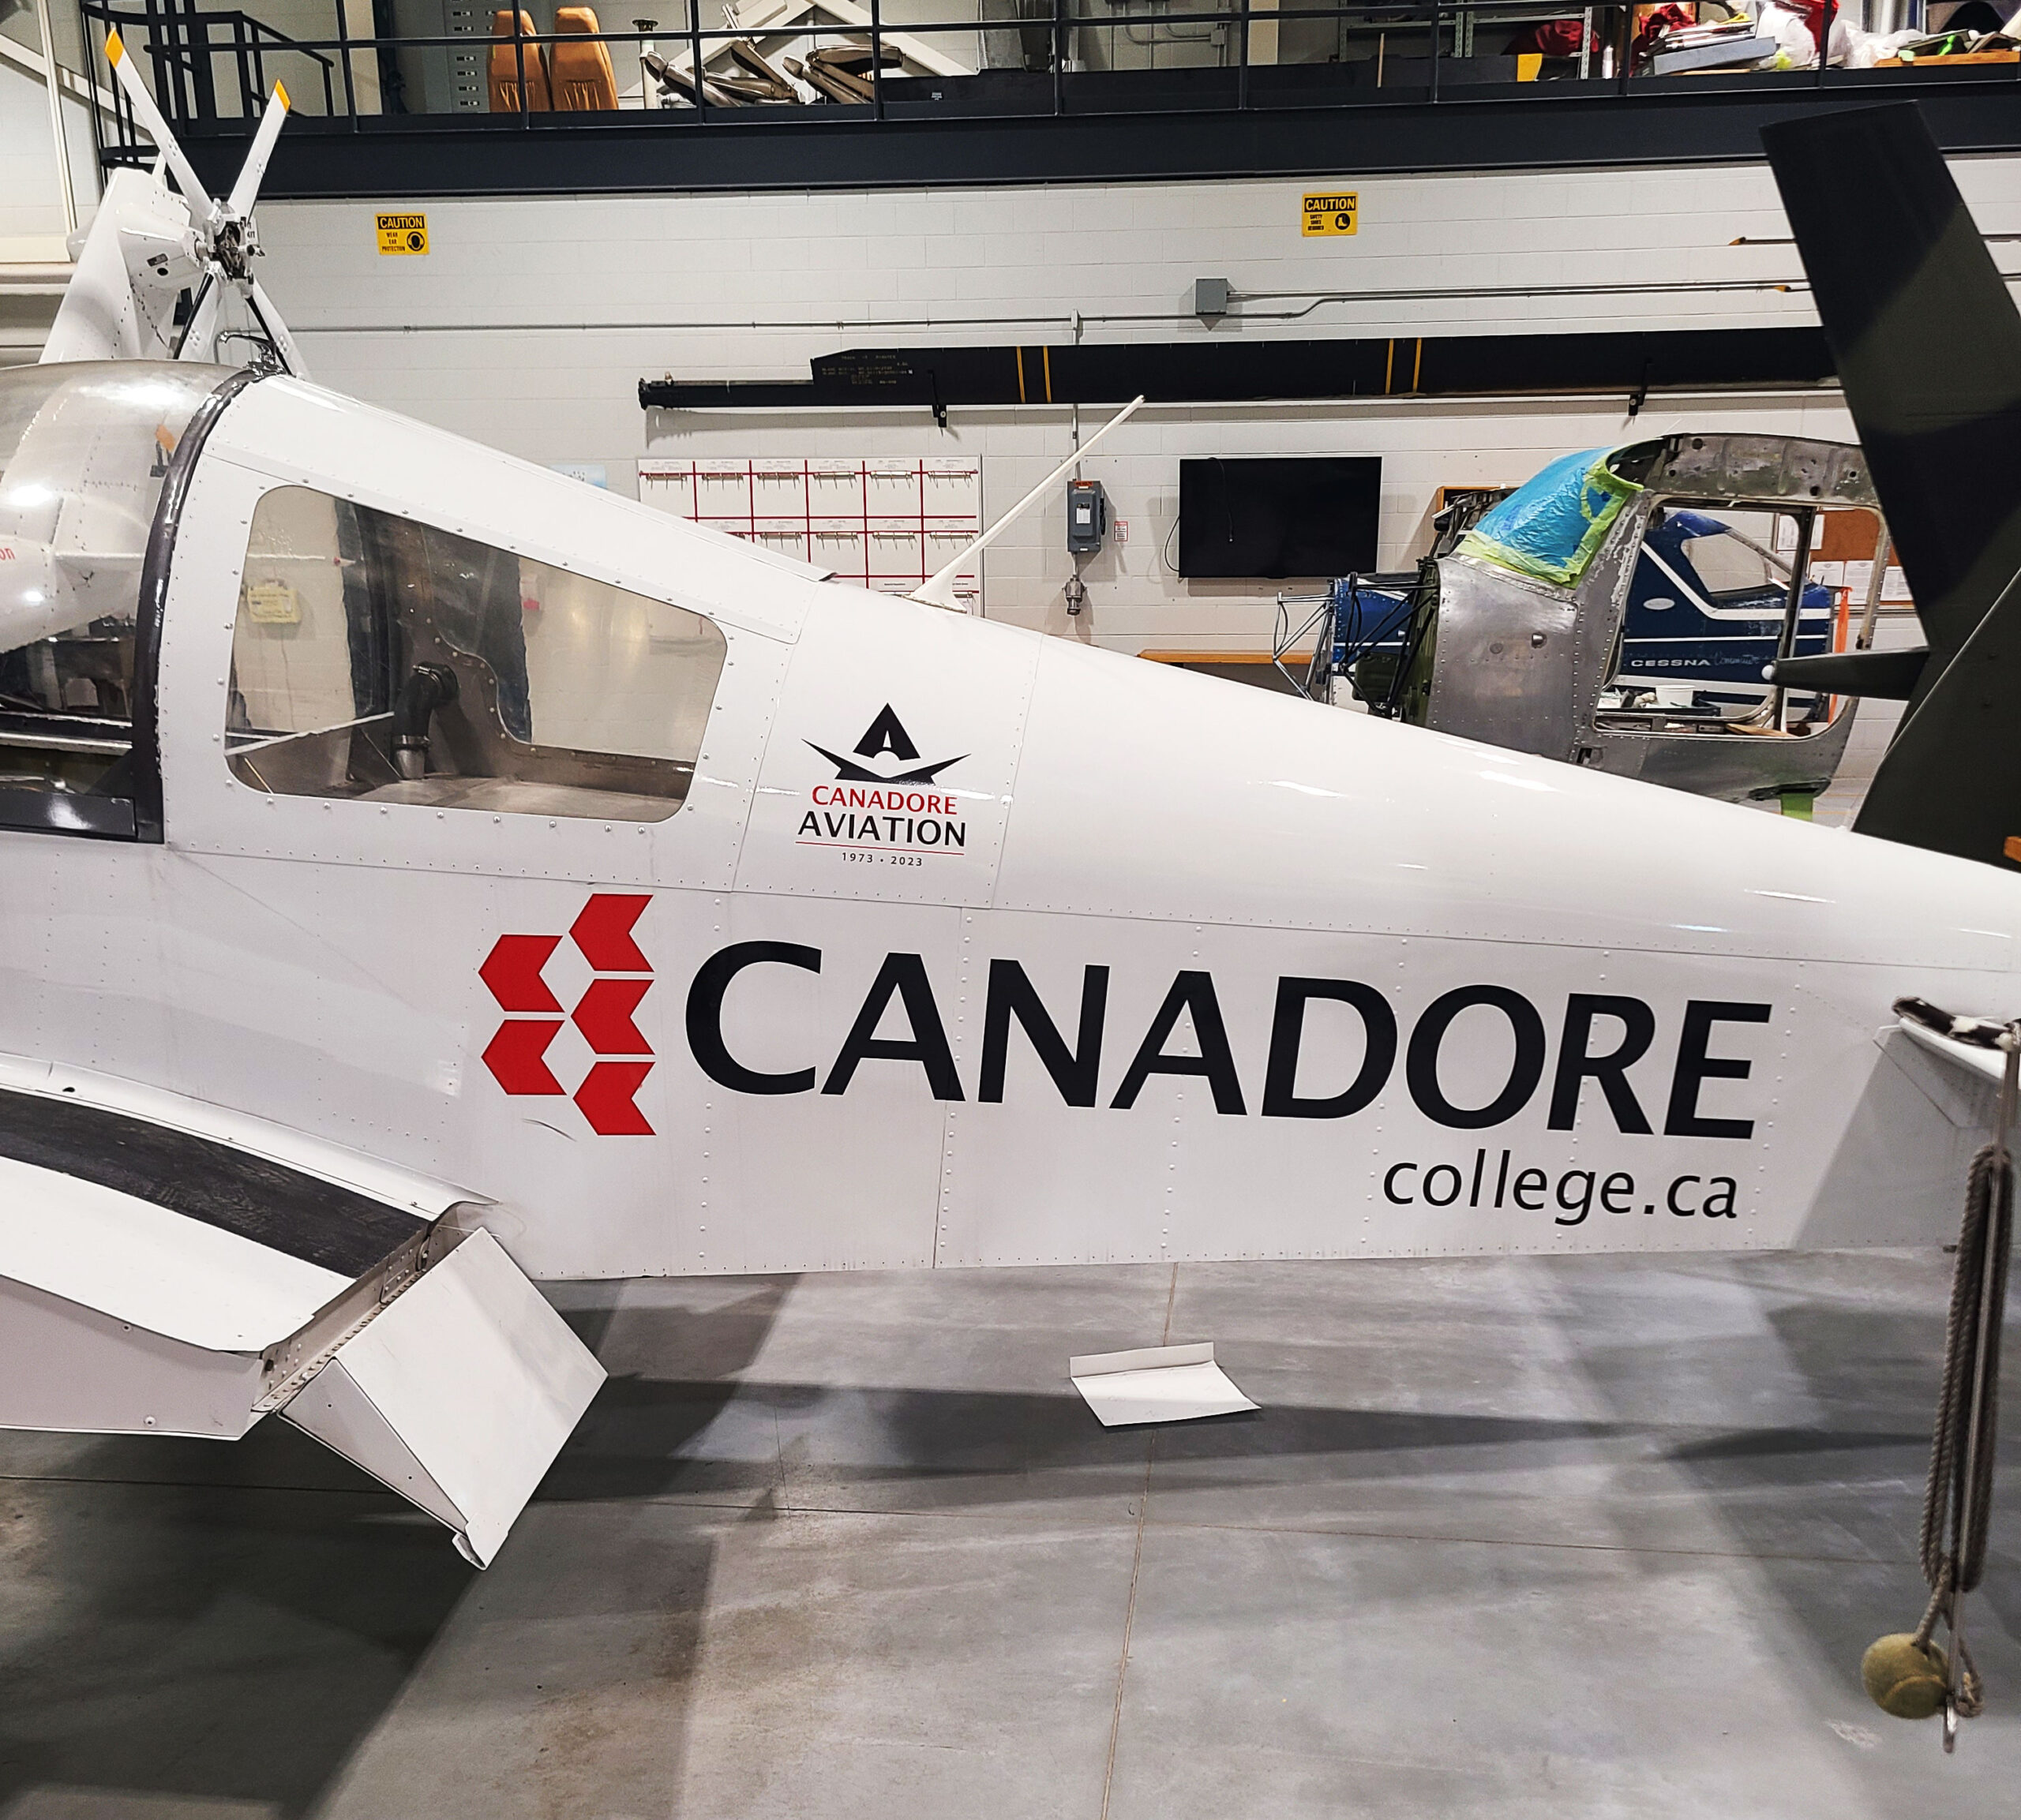 Canadore College Aviation - Plane Decals